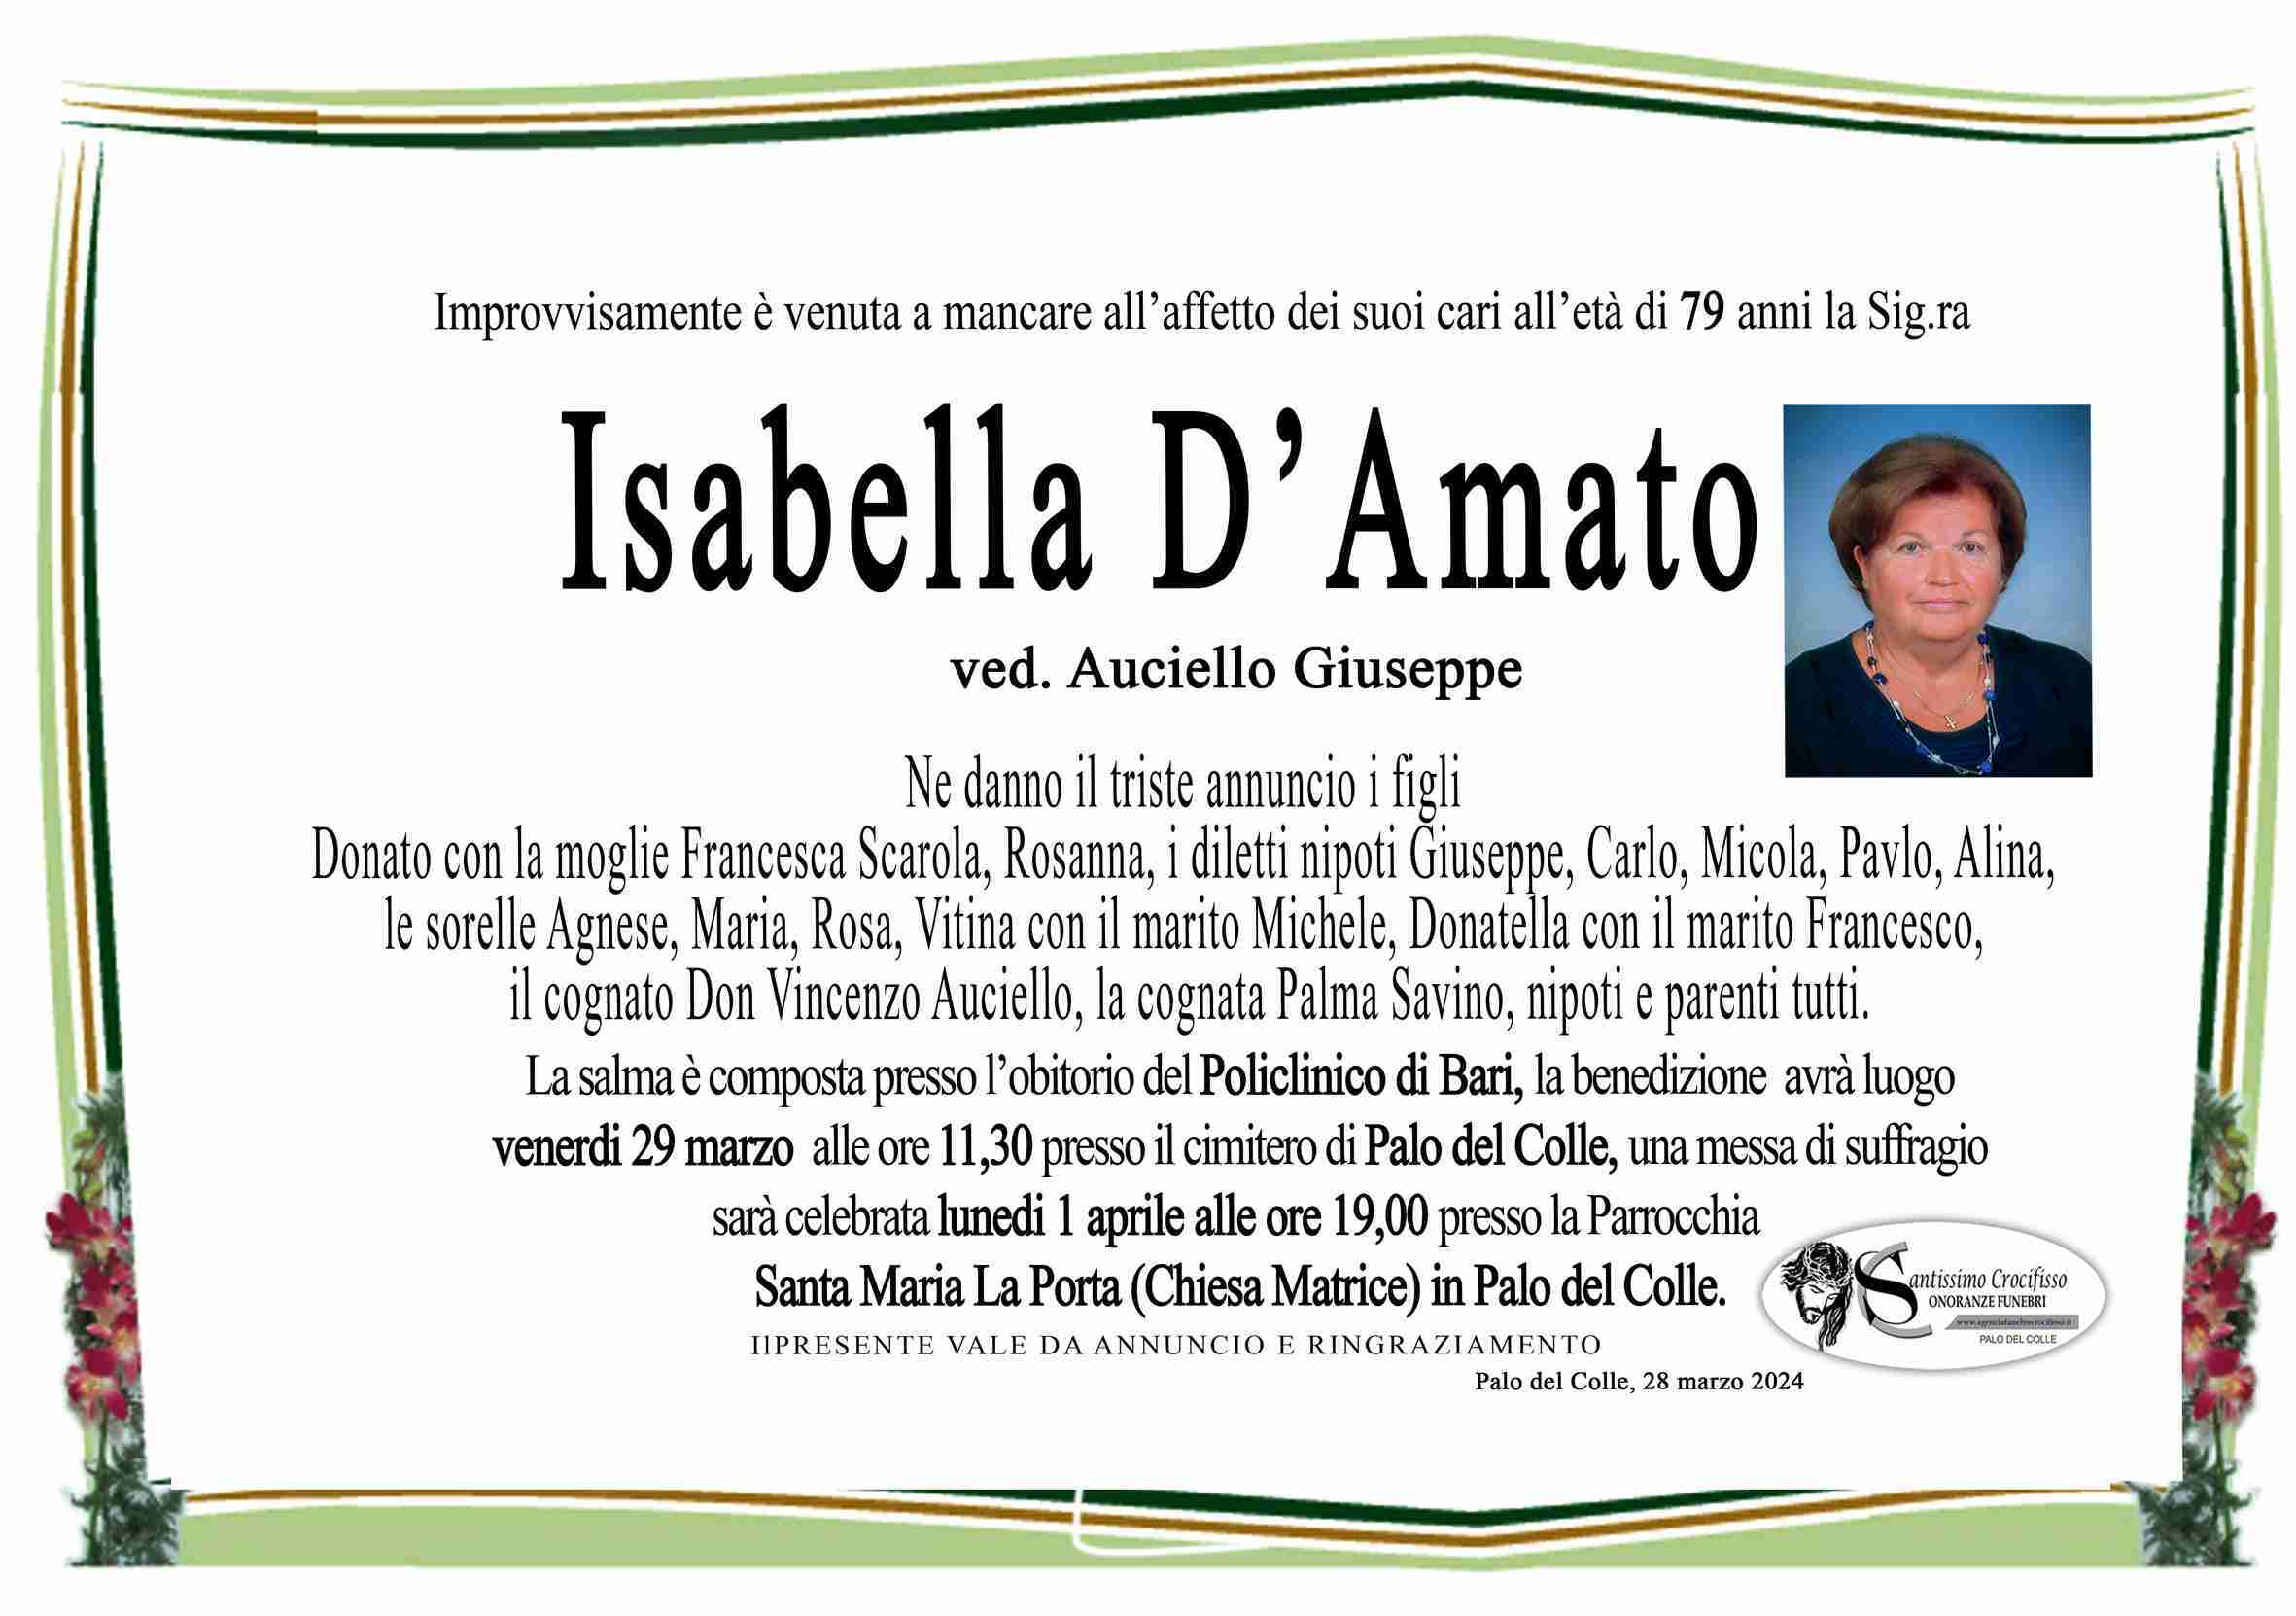 Isabella D'Amato